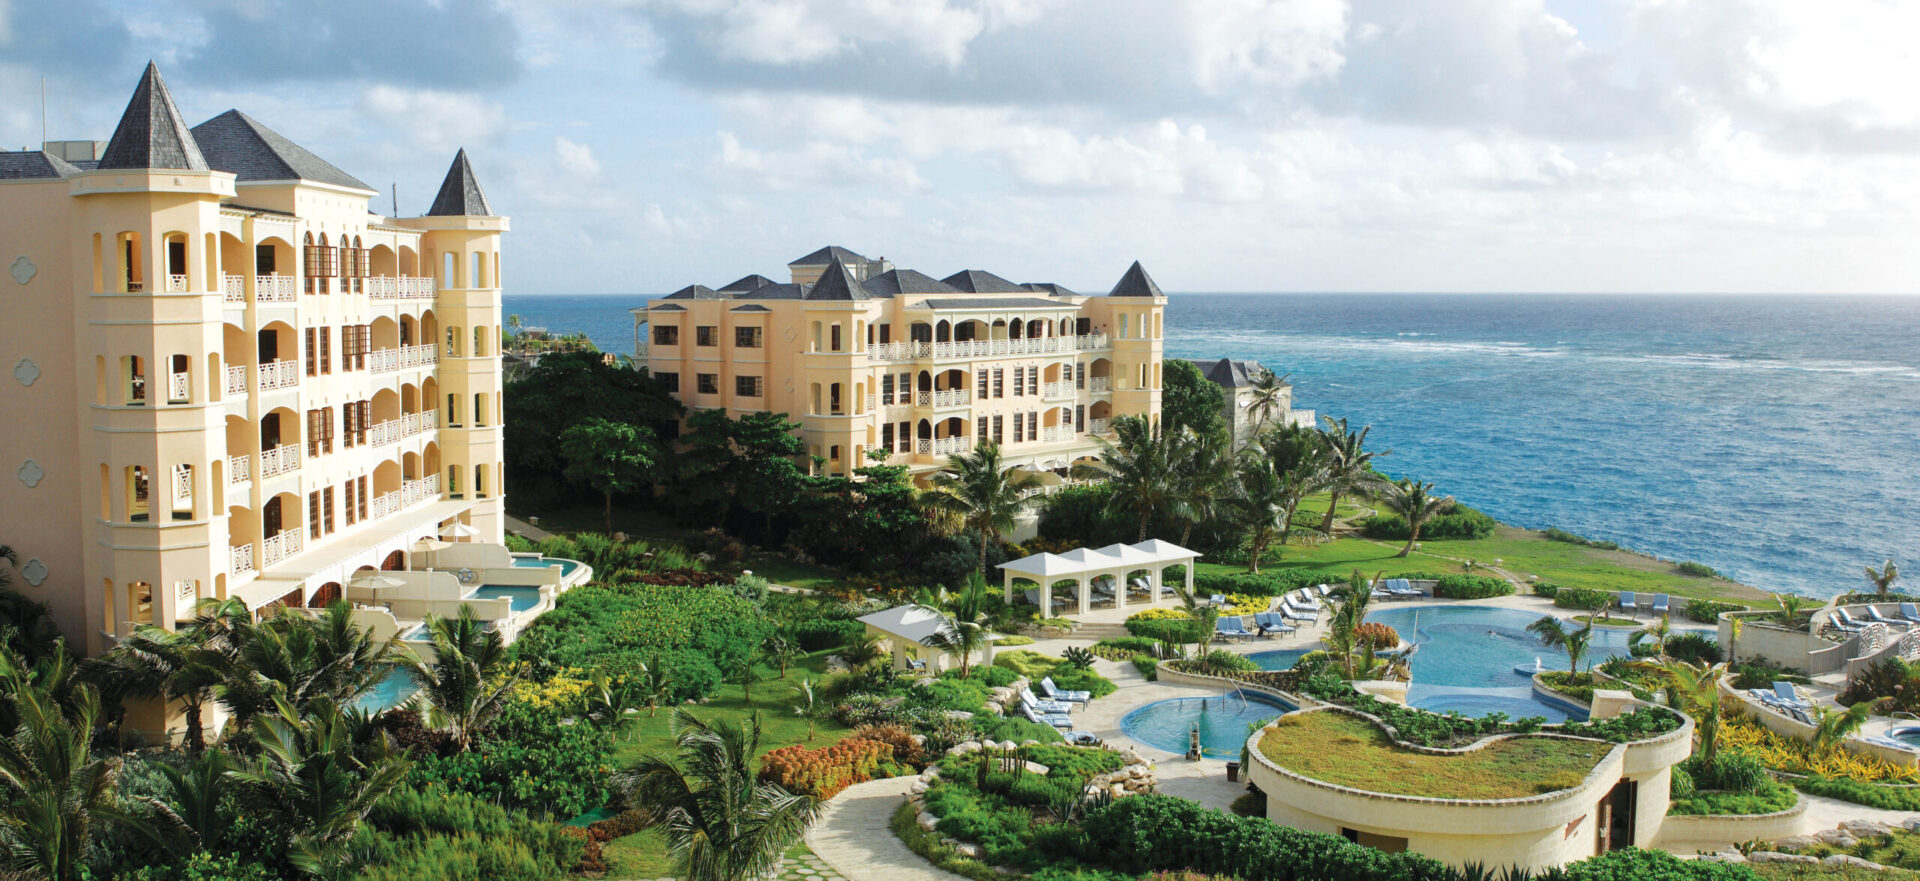 BWRCXA Barbados Panorama Residences Crane Resort Residences Caribbean Island Coast Sea Ocean Hotel Tourism Travel